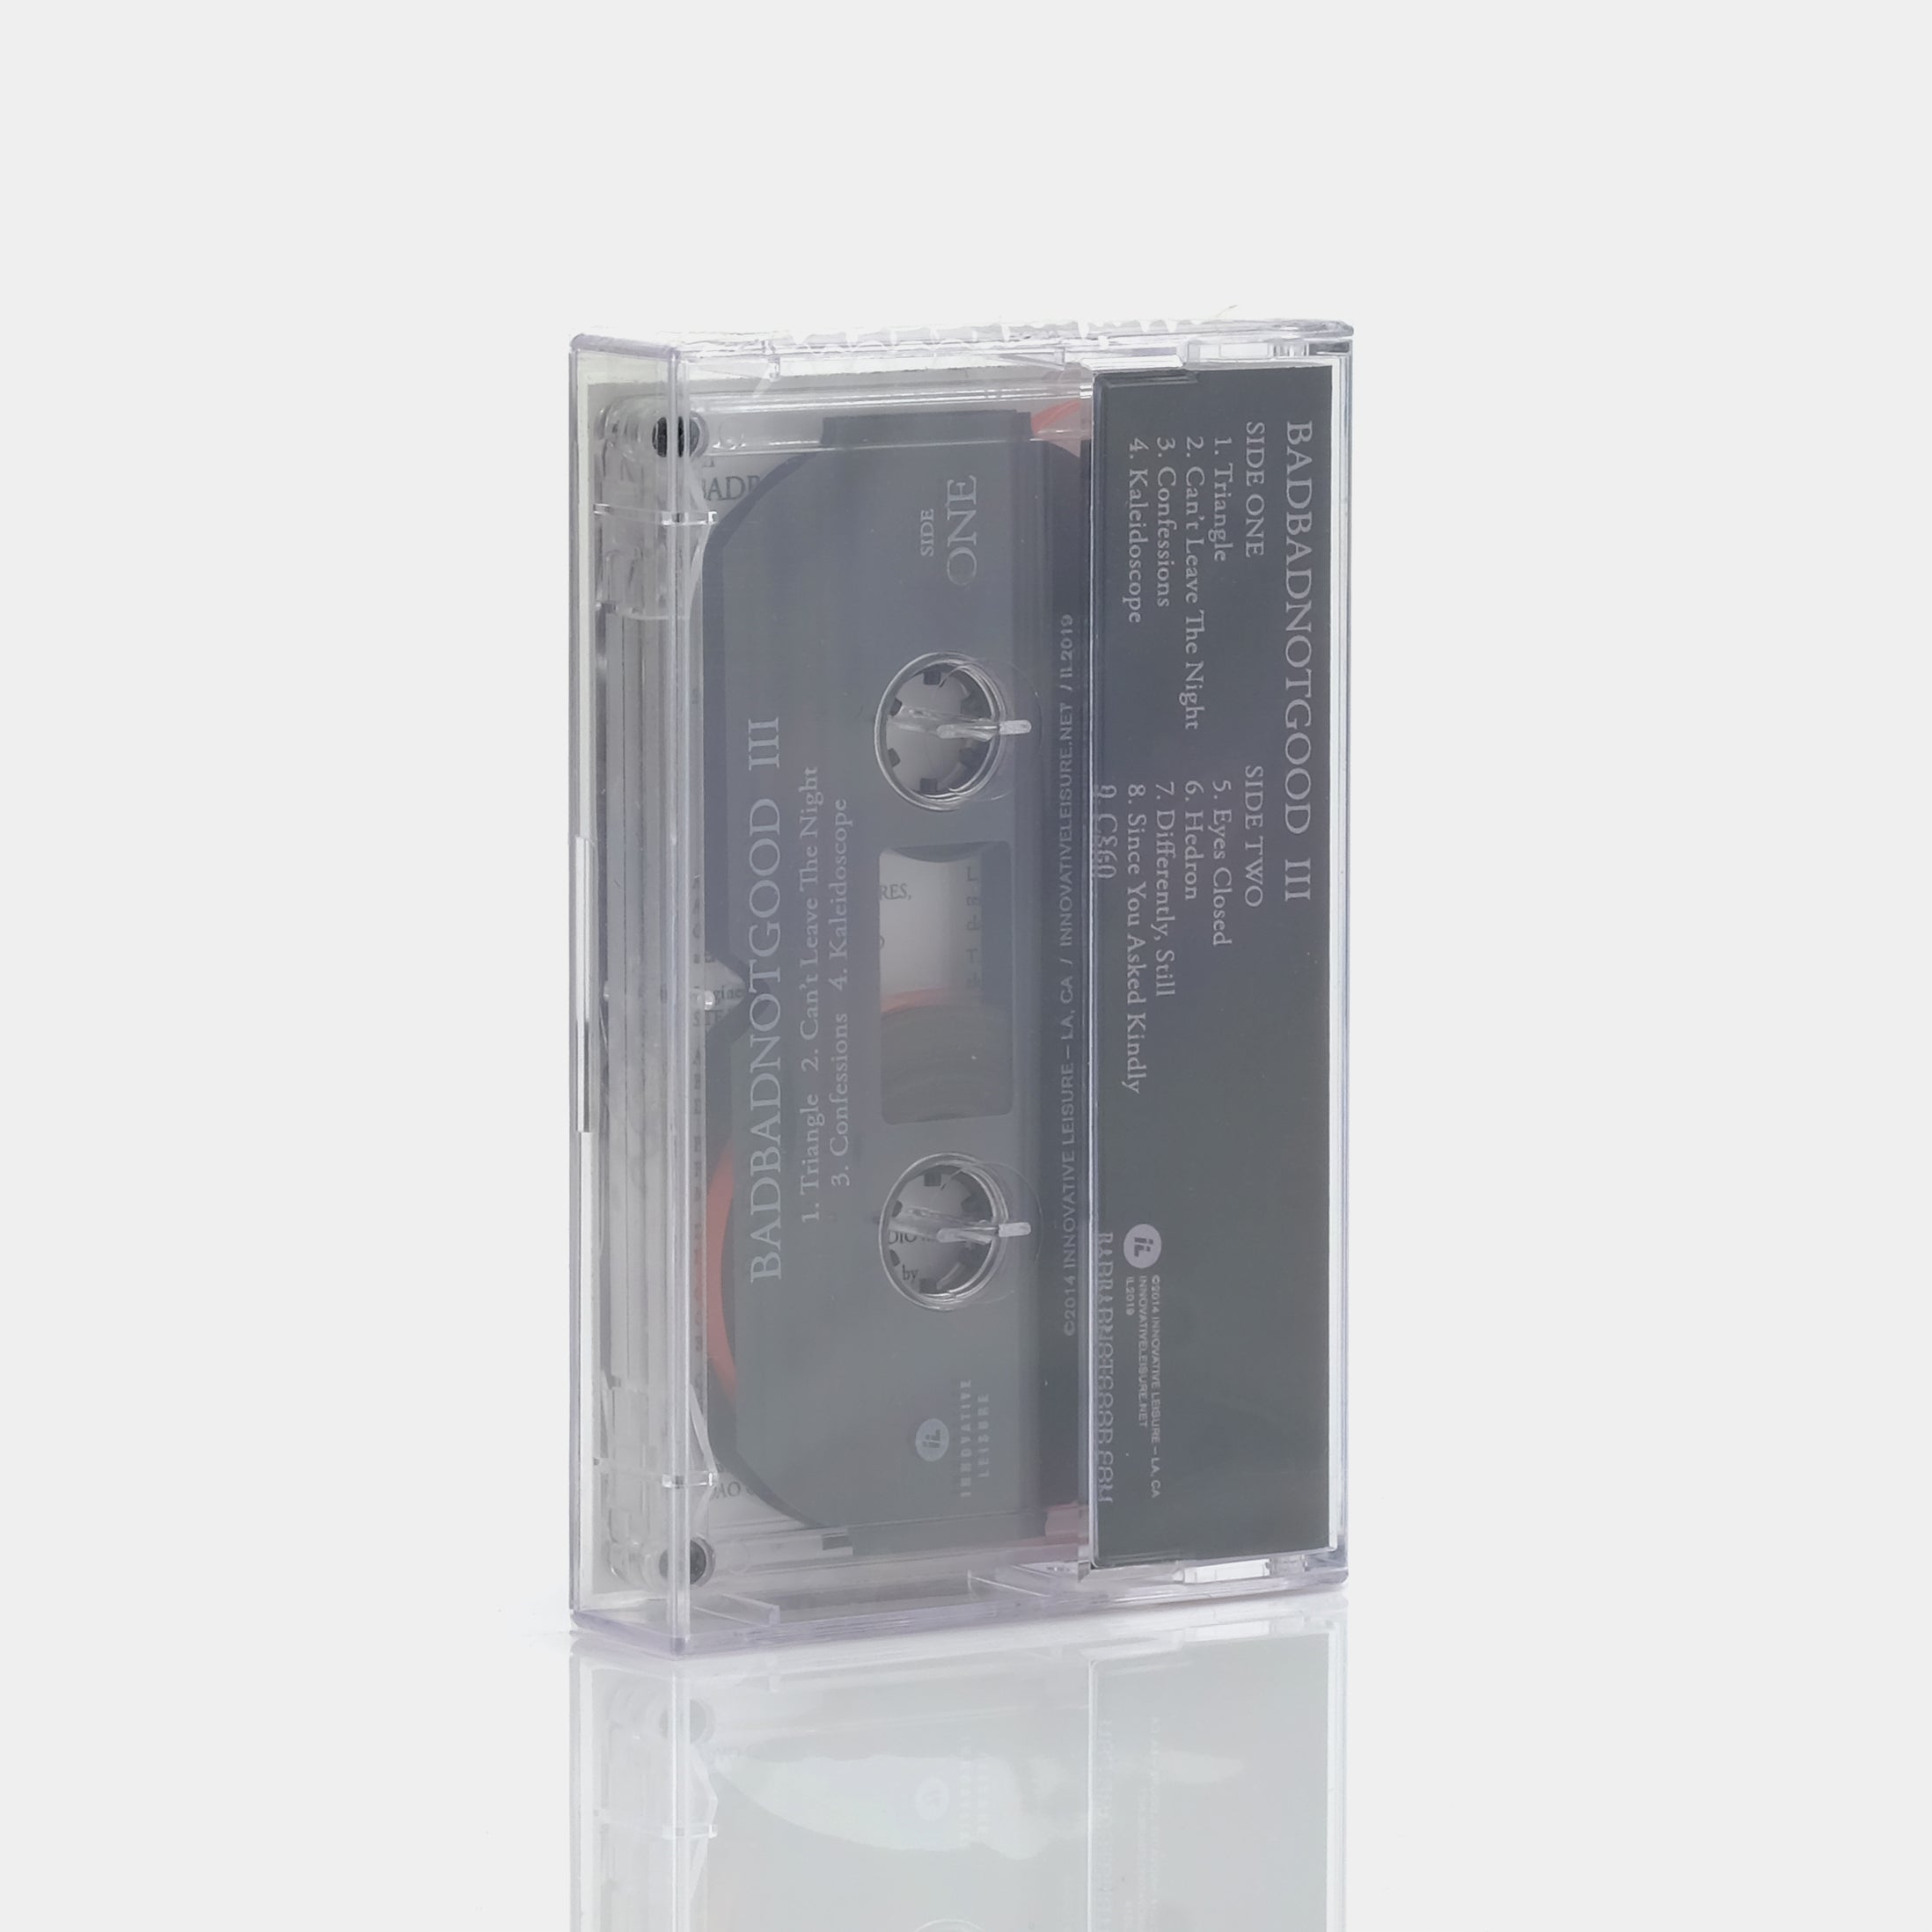 BADBADNOTGOOD - III Cassette Tape